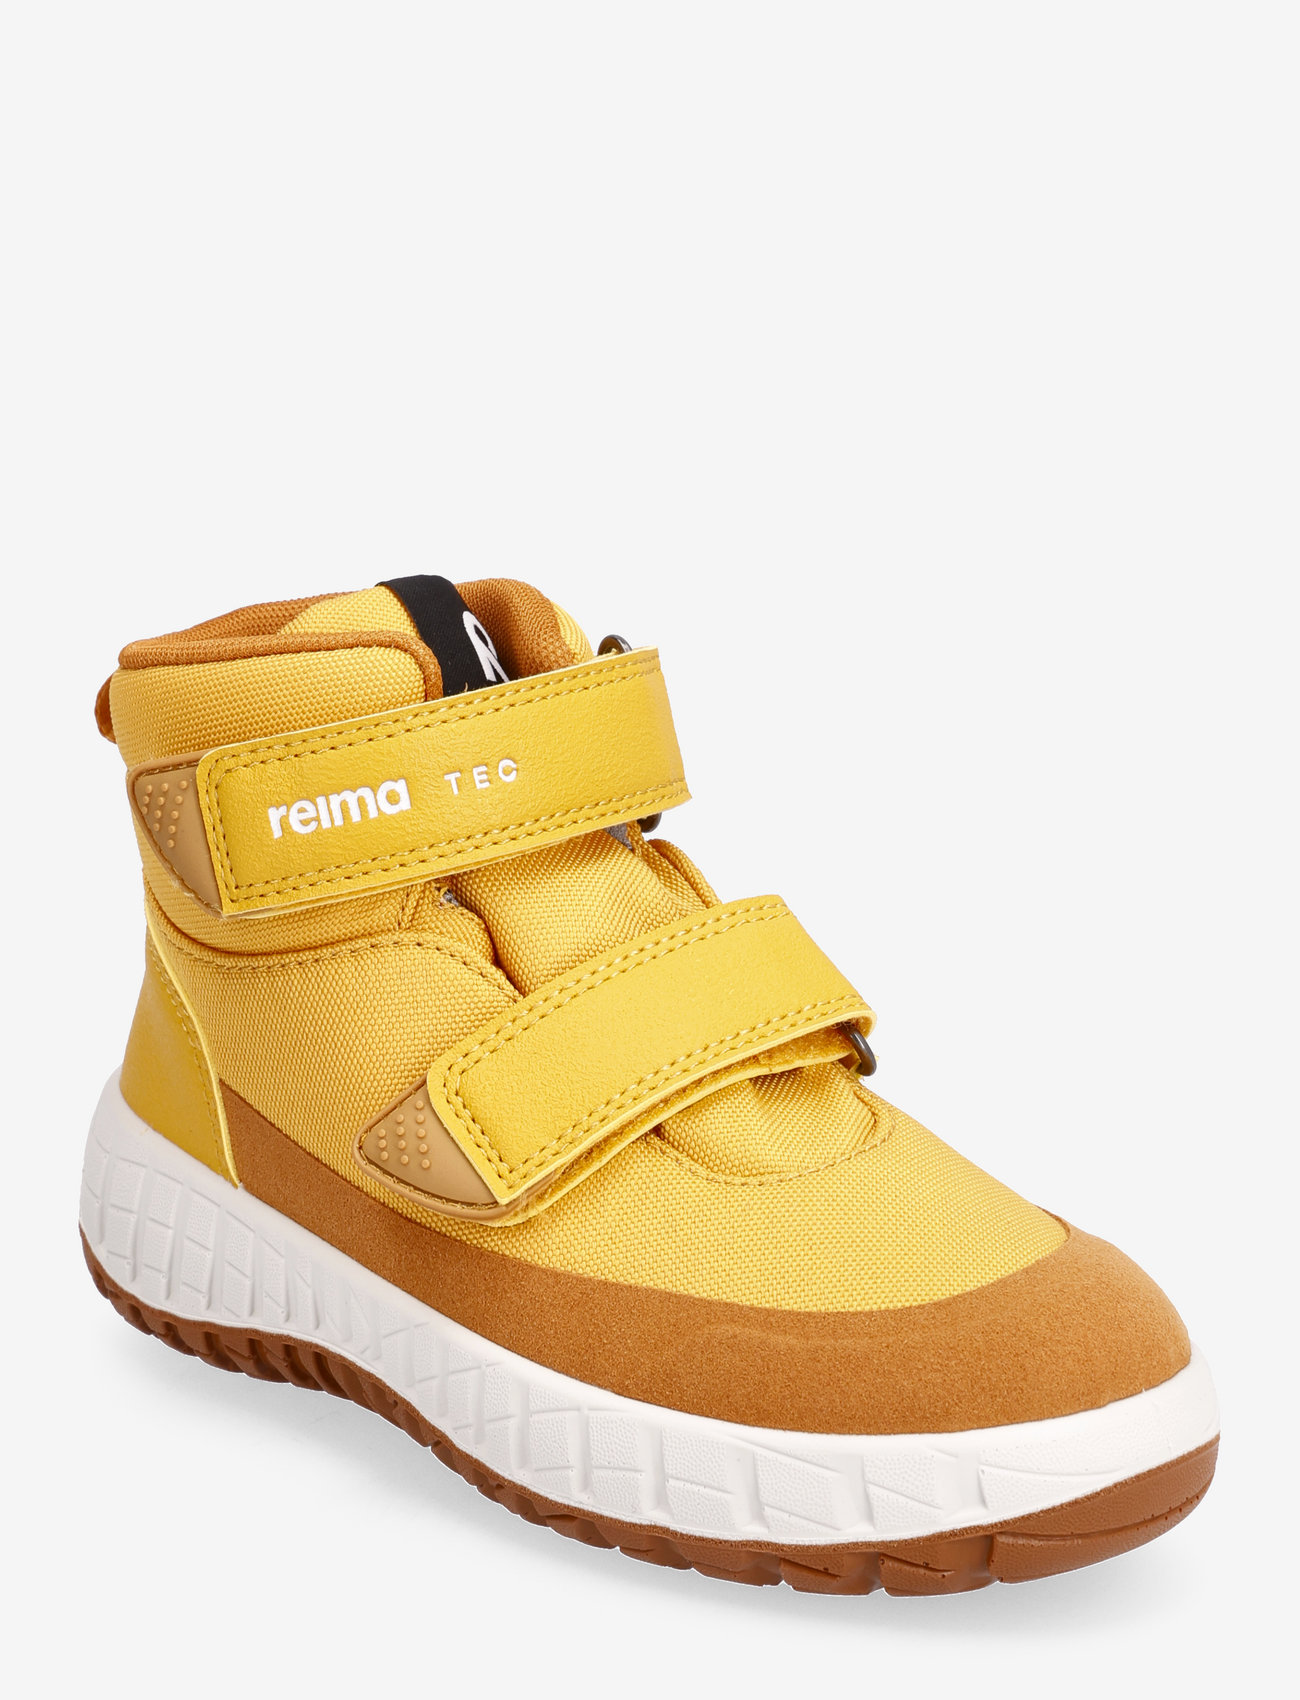 Reima - Reimatec shoes, Patter 2.0 - hoher schnitt - ochre yellow - 0